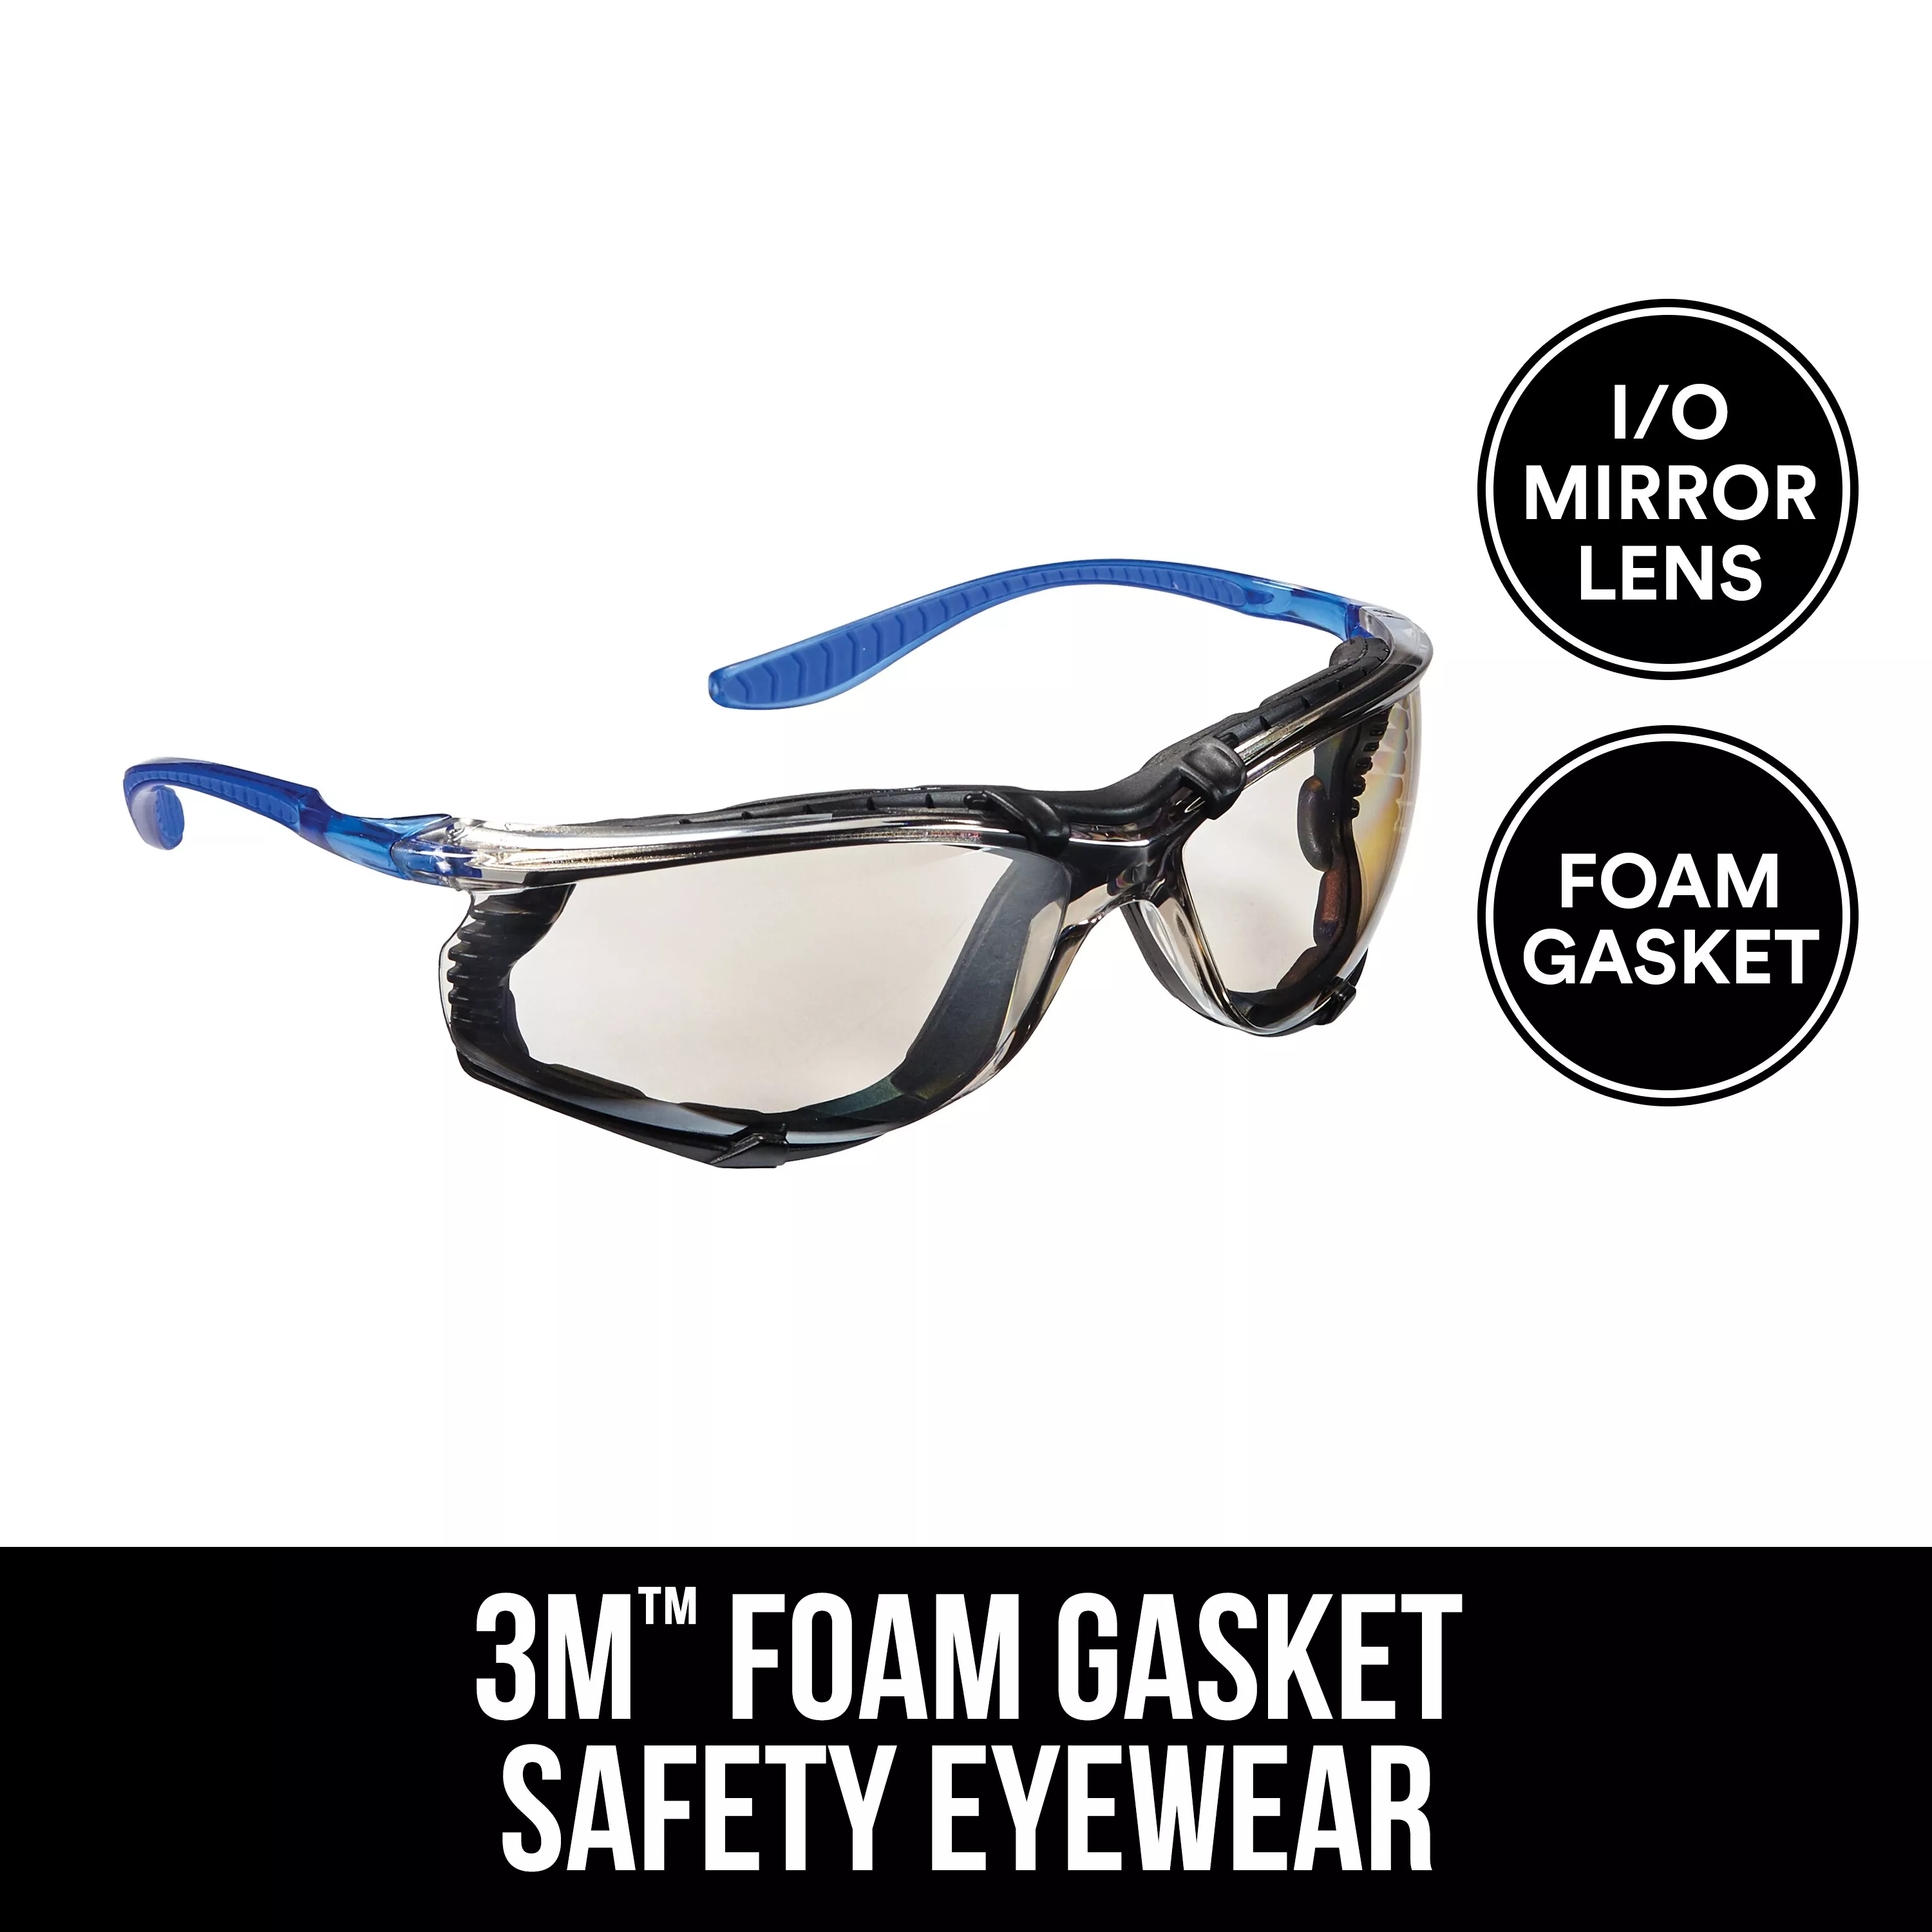 3M™ Performance Eyewear Gasket Design 47200-HZ6-NA, Mirror Lens,
Anti-Fog, 6ea/css